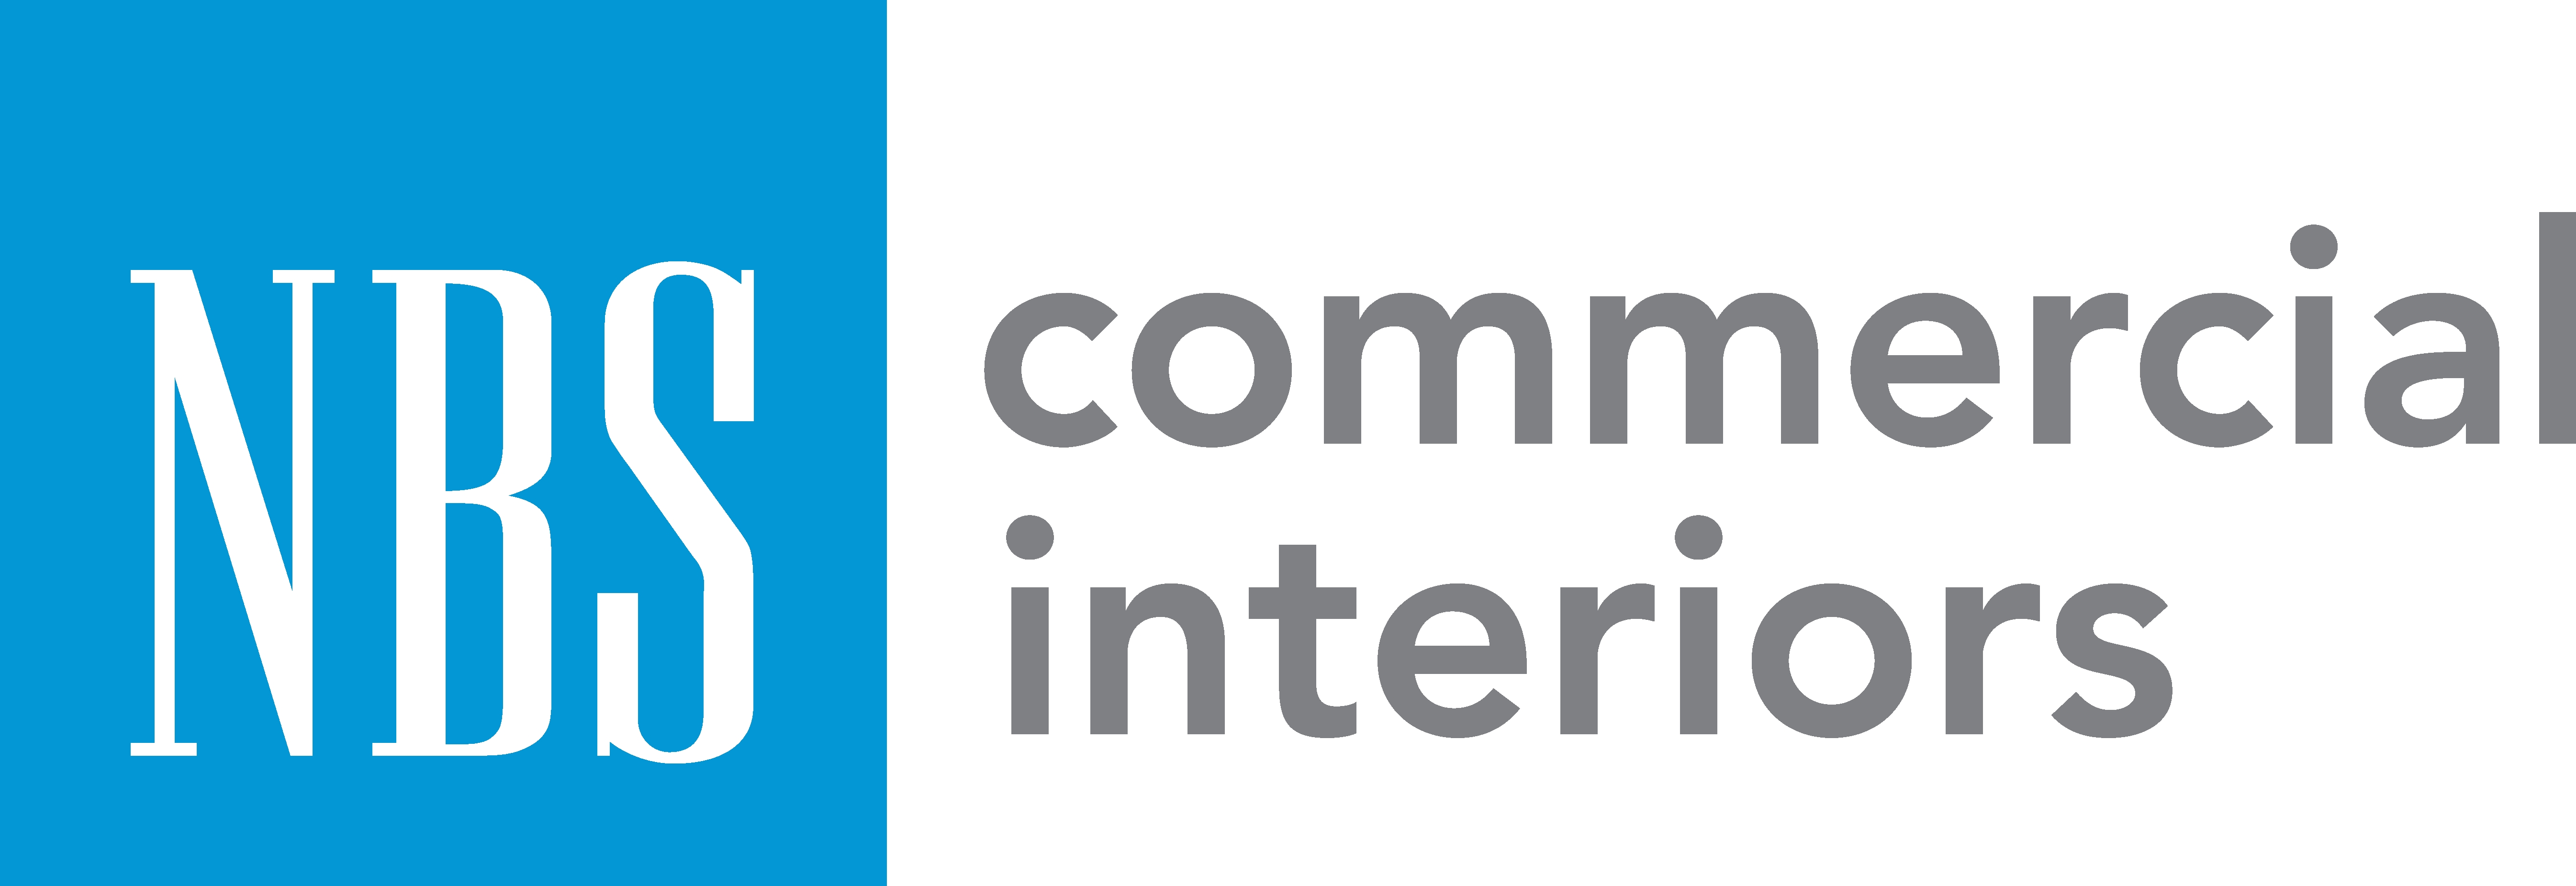 NBS Commercial Interiors logo